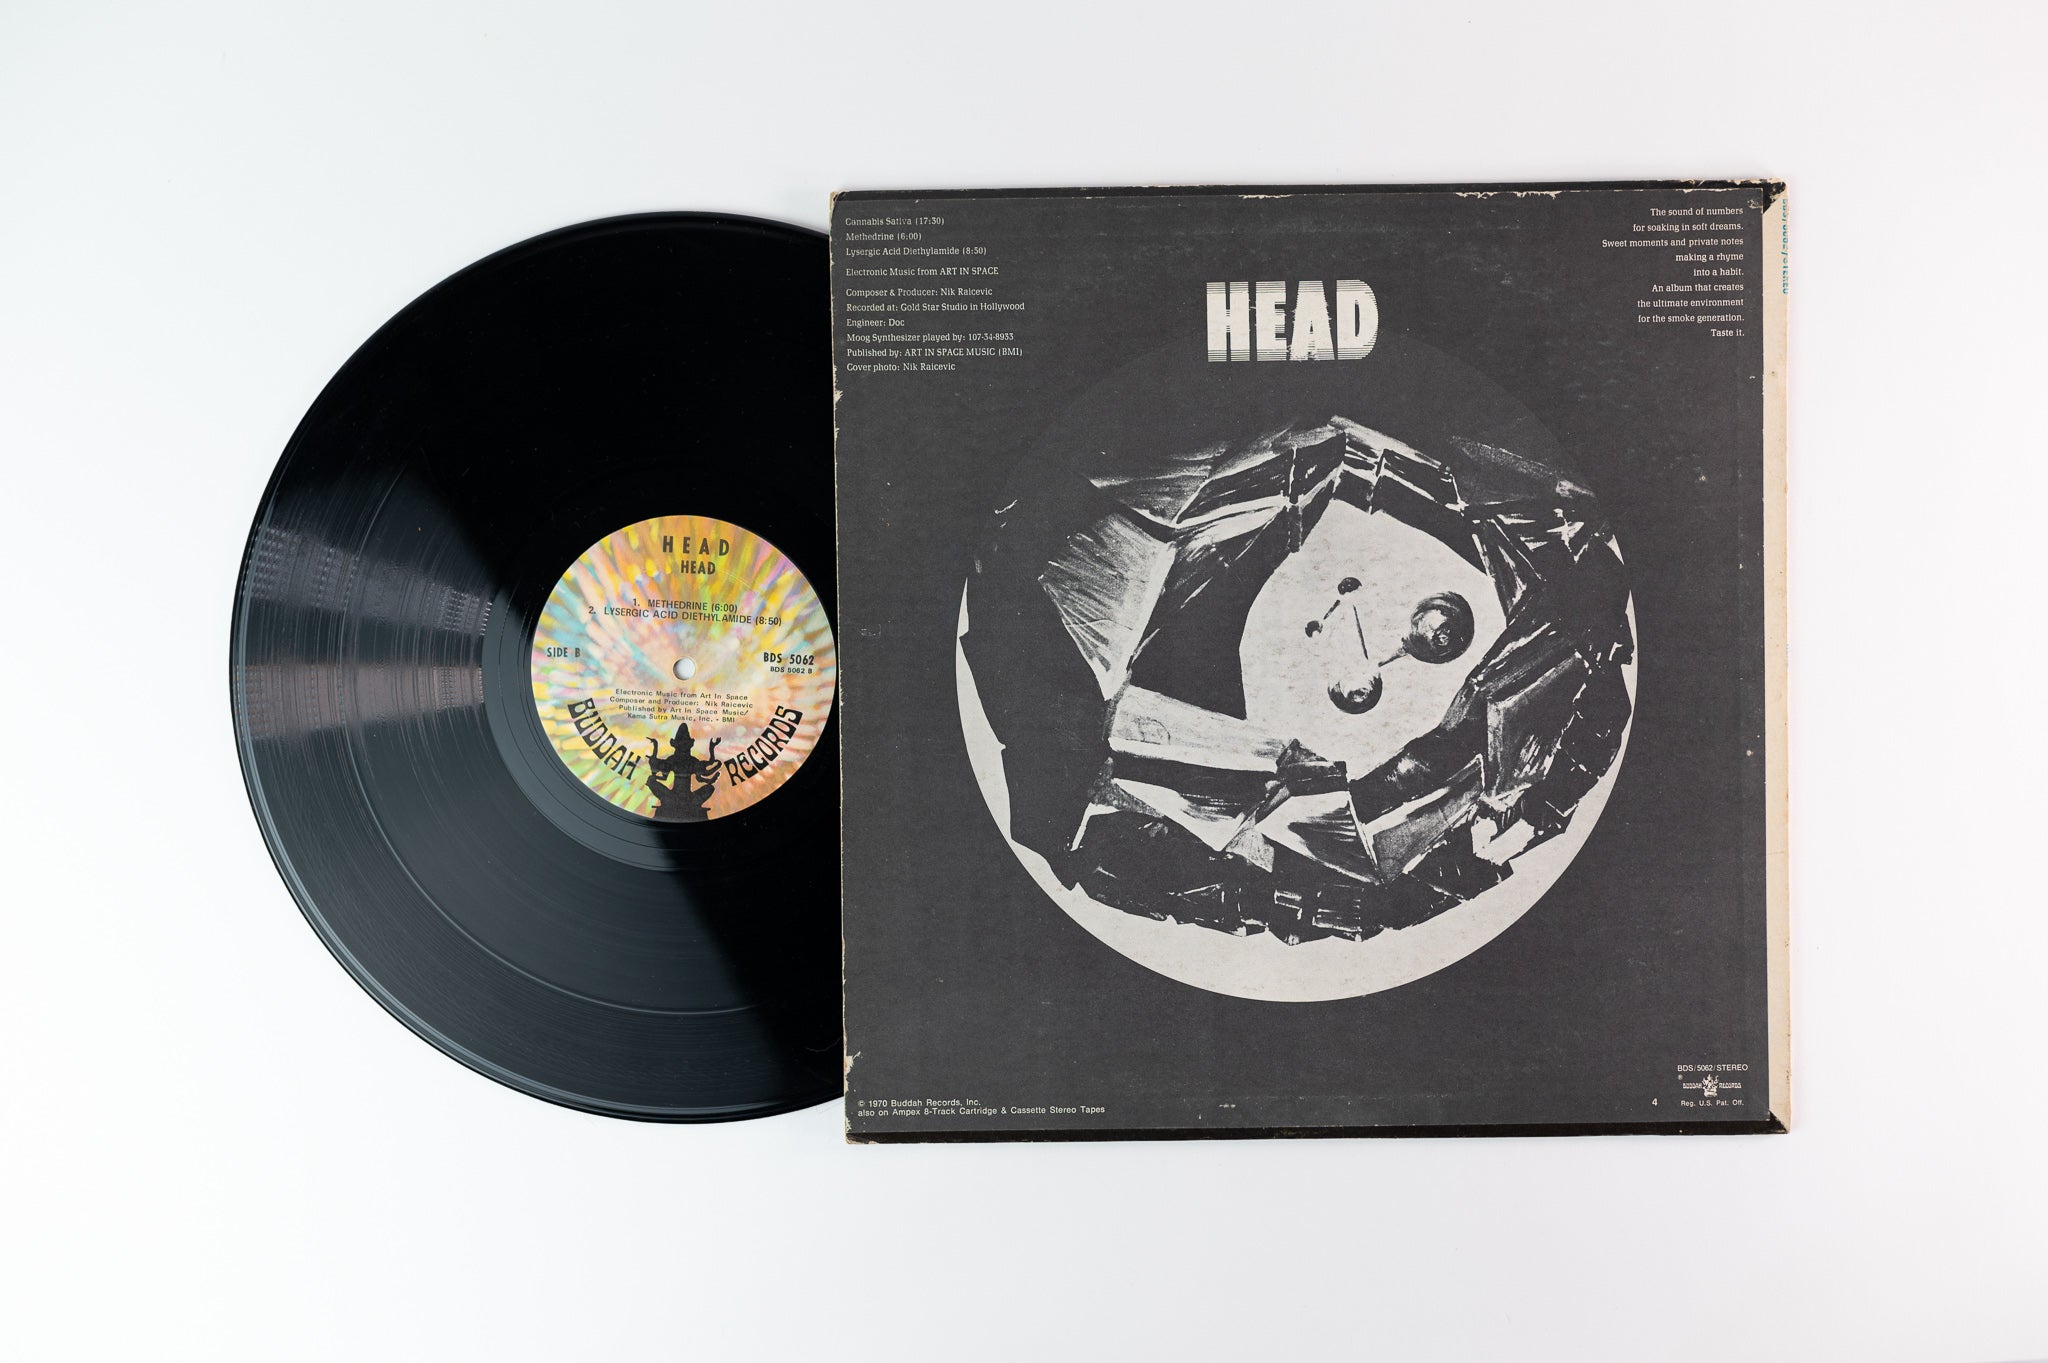 Head - S/T on Buddah Records